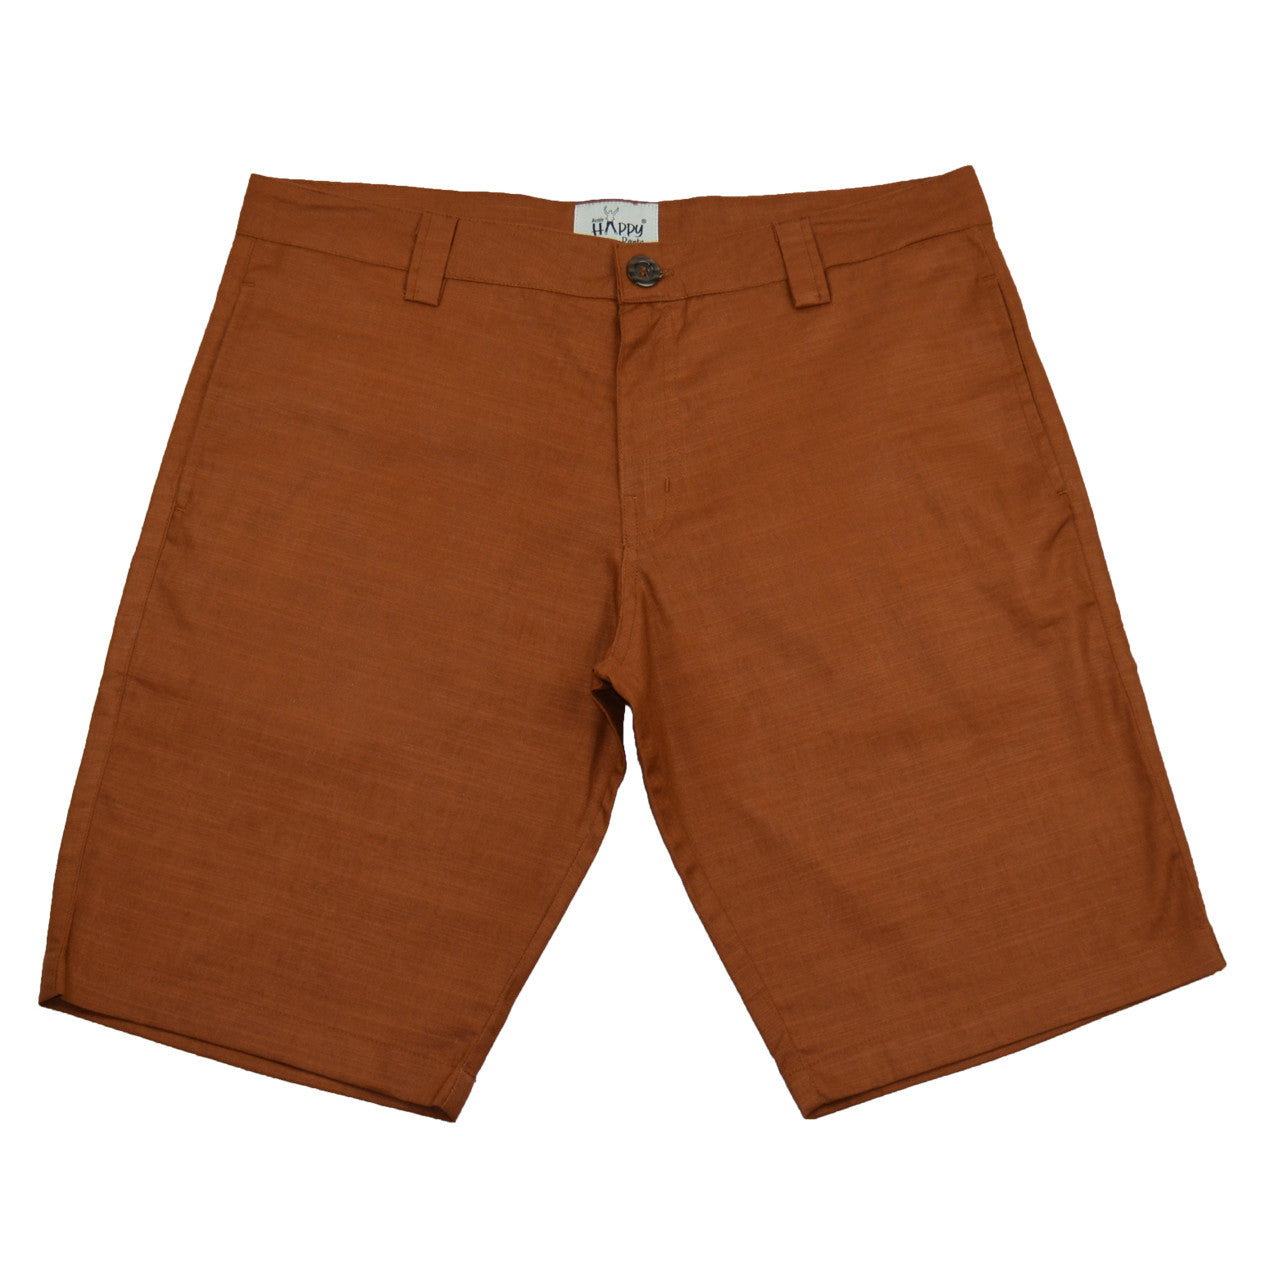 Brown Cotton BoardShorts - Happy Pants - 1